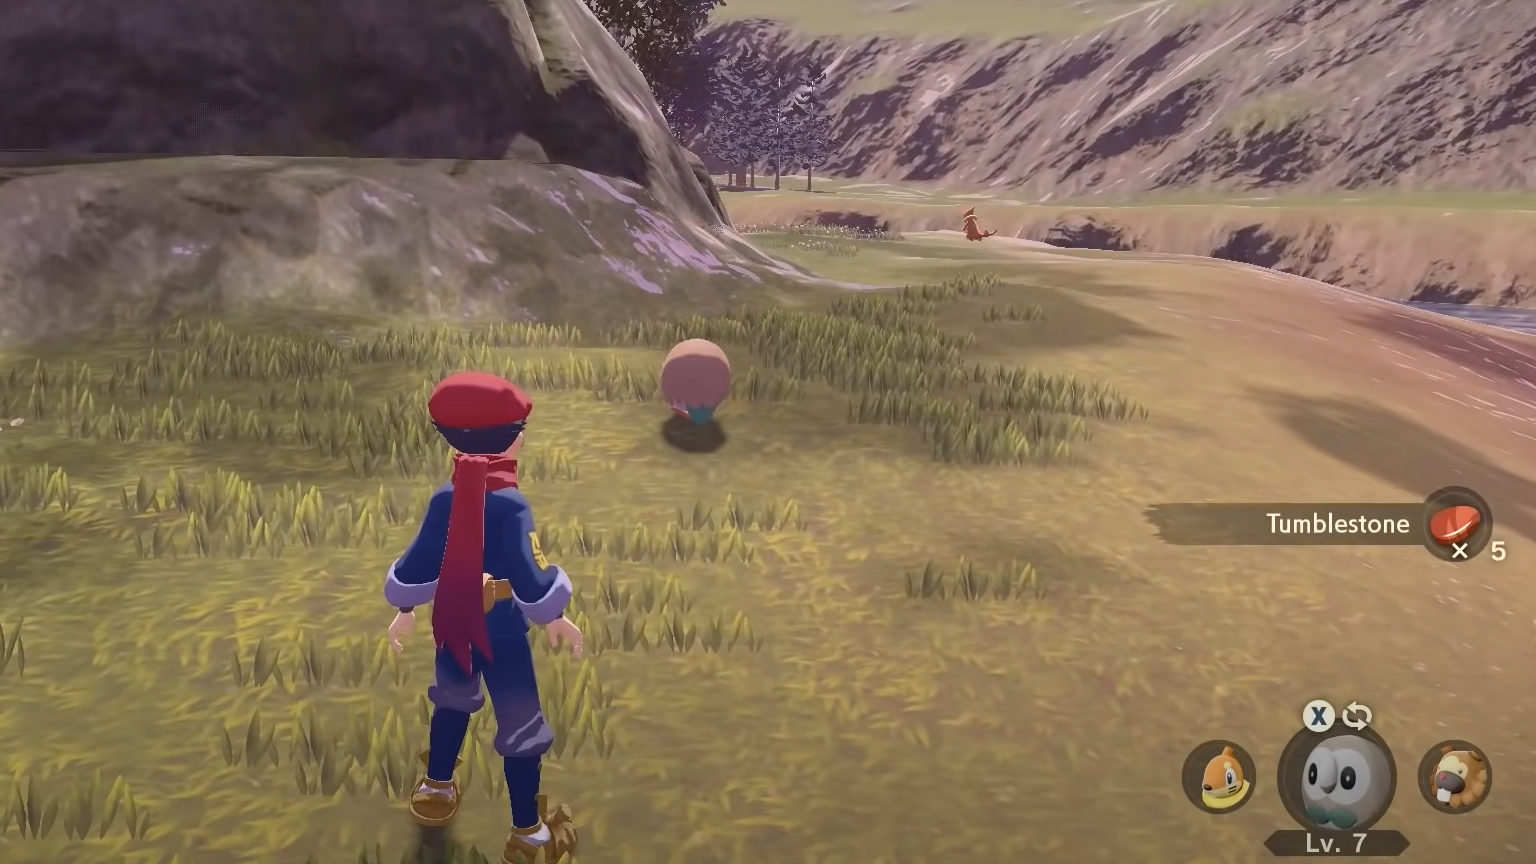 A Pokémon Trainer uses their Rowlet to farm Tumblestone from a rock in Obsidian Fieldlands of Pokémon Legends: Arceus.